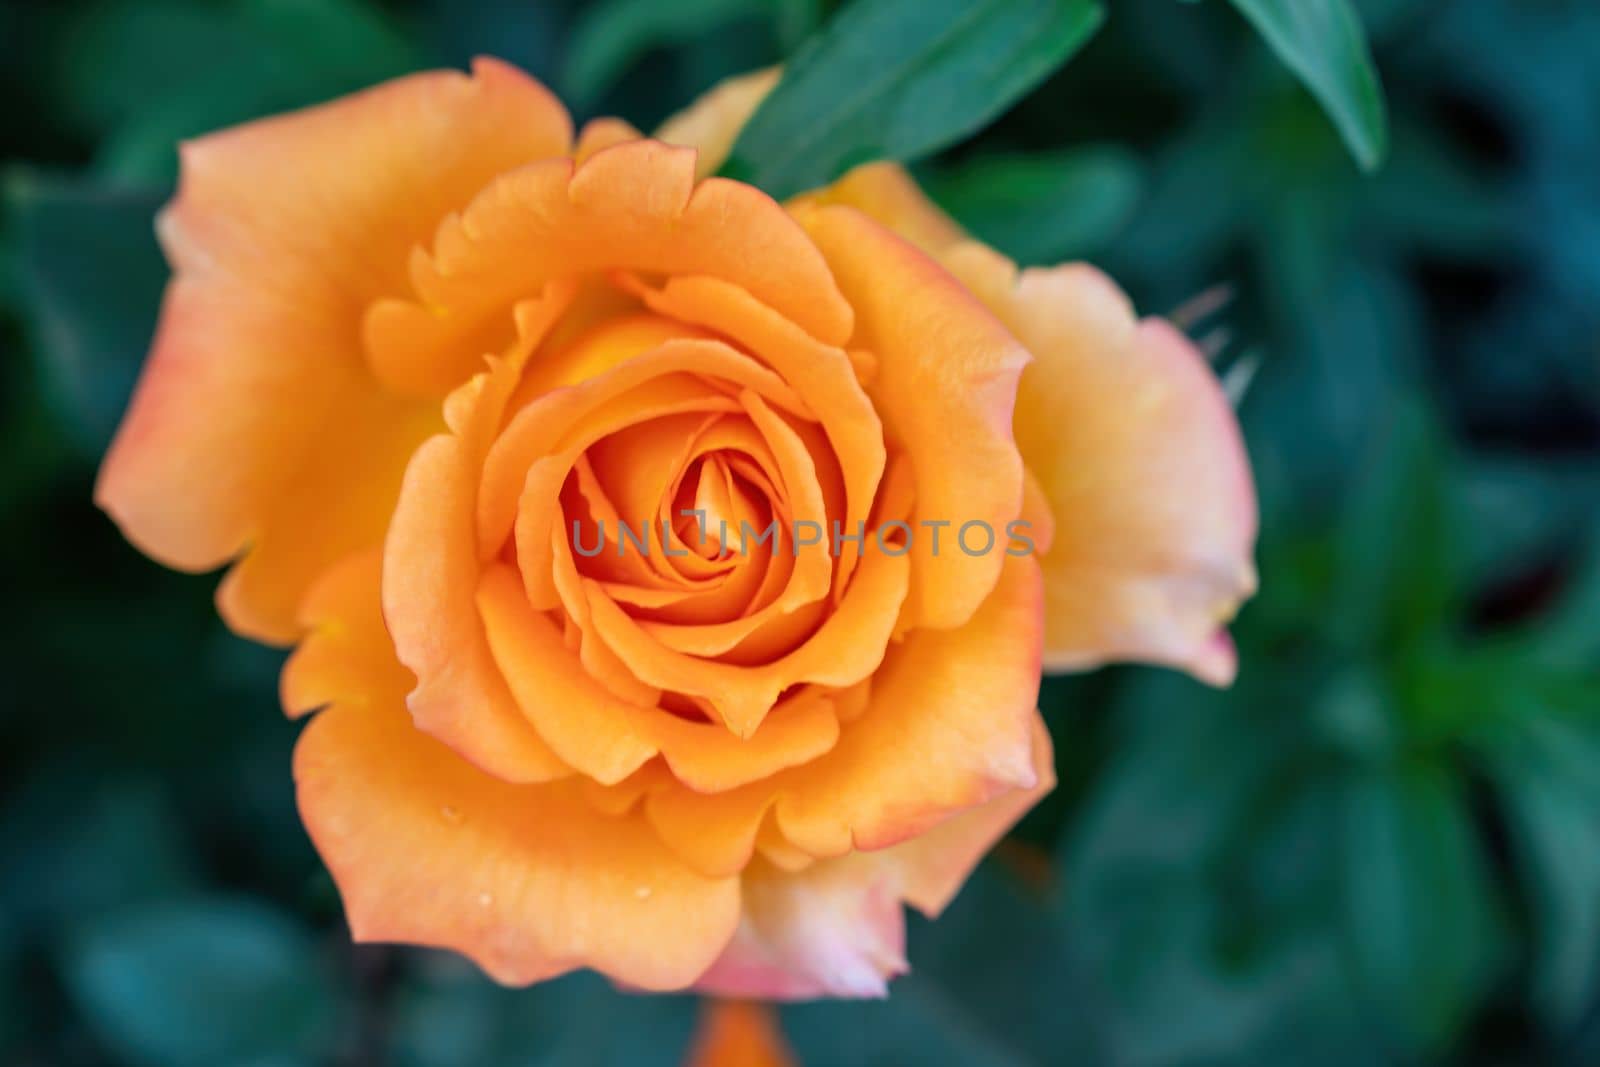 Beautiful Rose and Rosebuds in Rose Garden, Close Up, Selective Focus